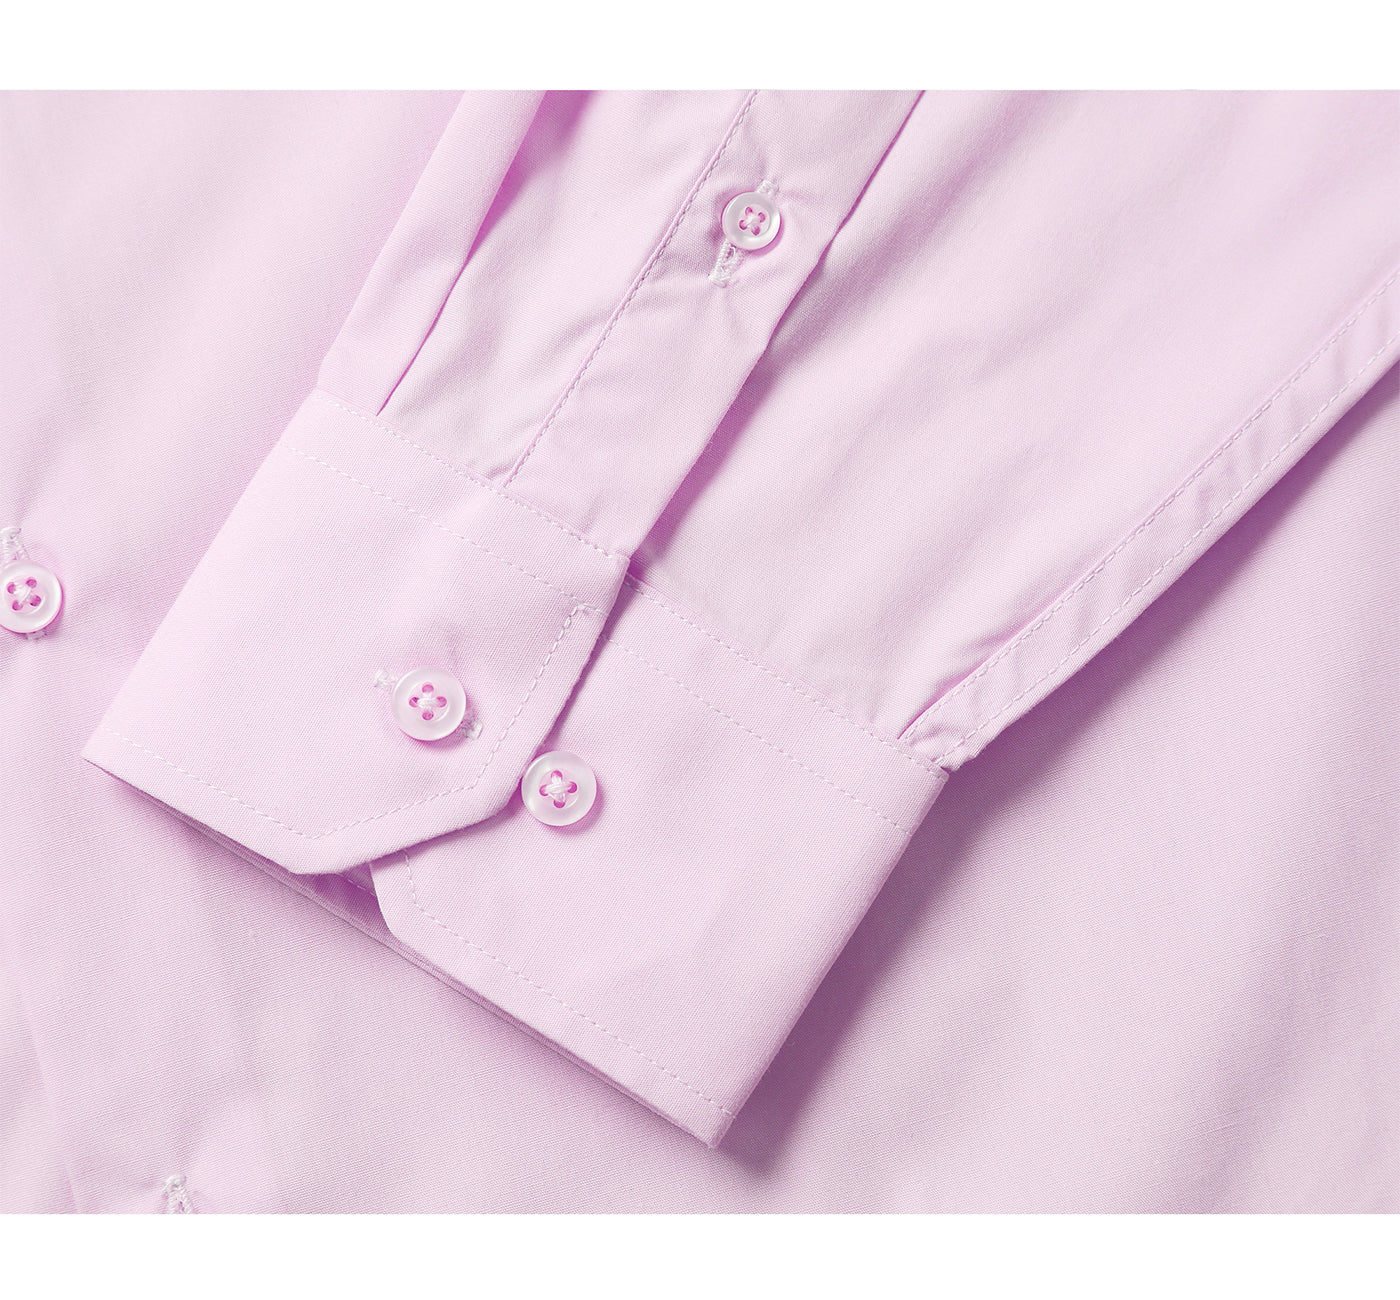 CS0222 Men's Classic Fit Long Sleeve Travel Easy-Care Cotton Light Pink Dress Shirt